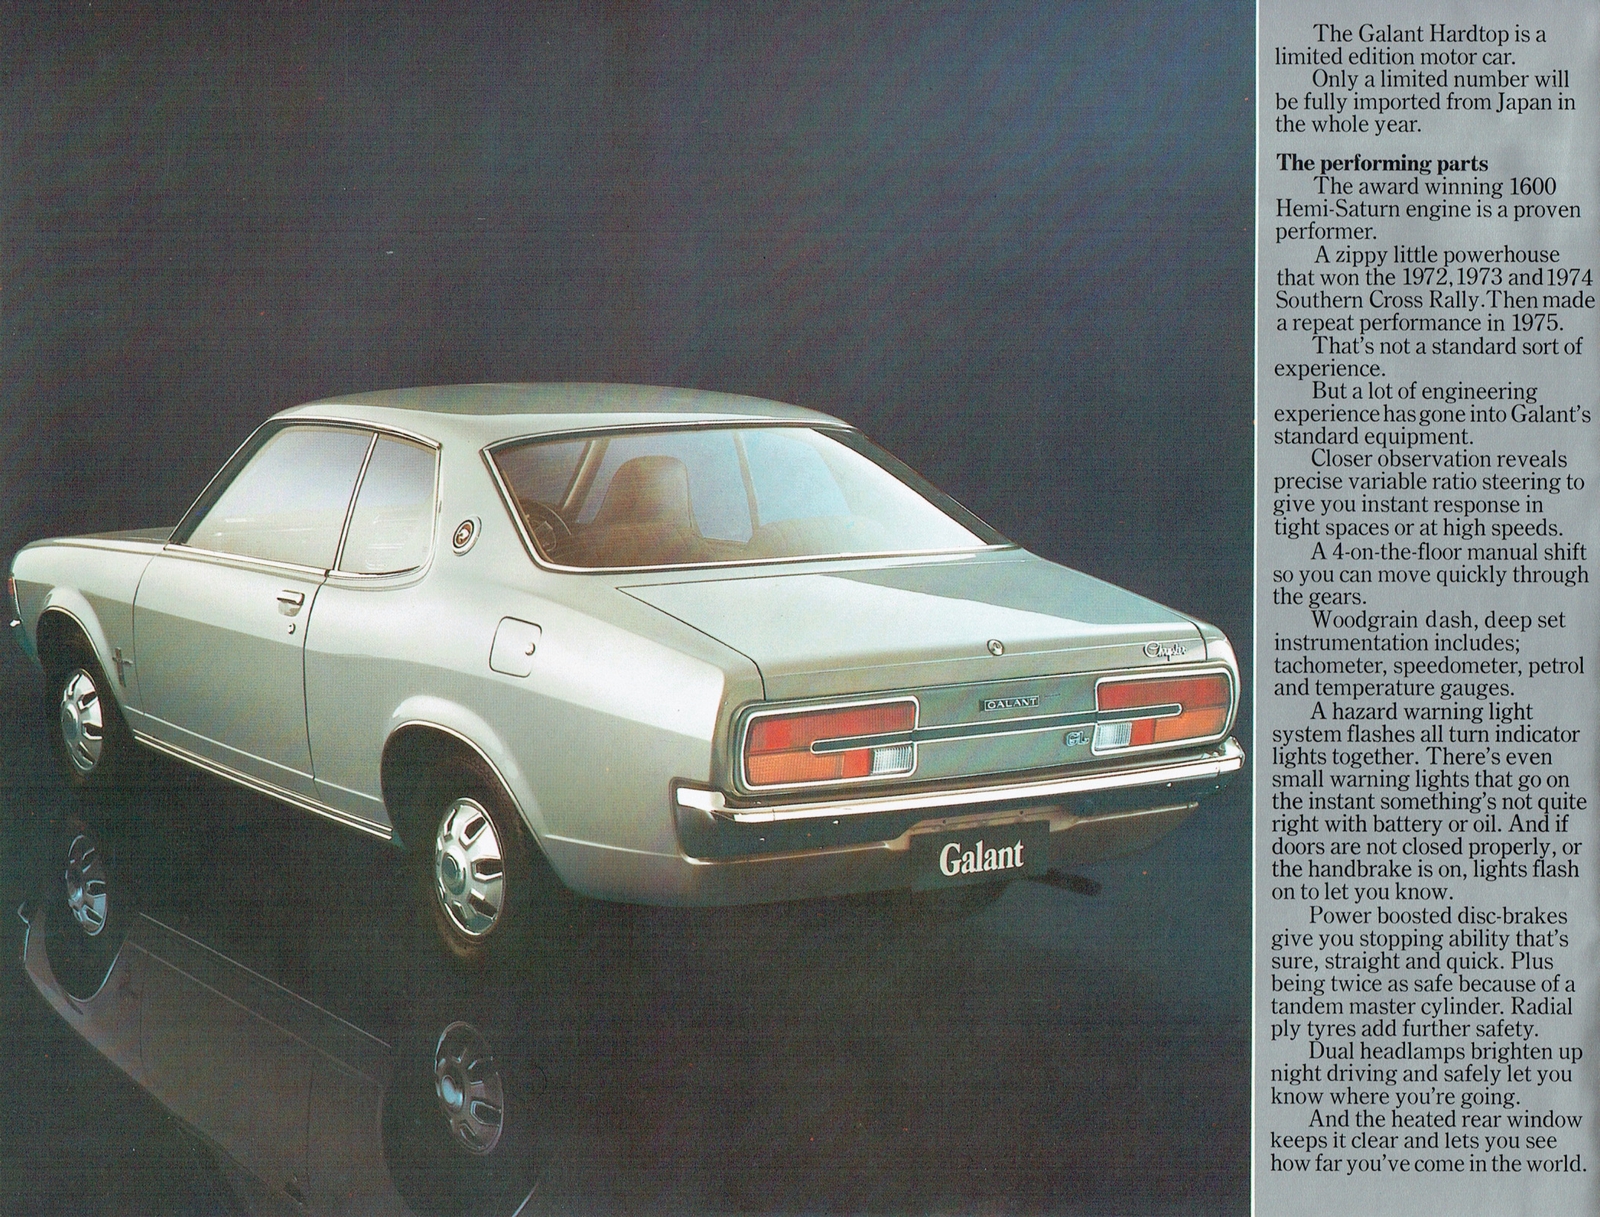 n_1976 Chrysler Galant Hardtop-02.jpg